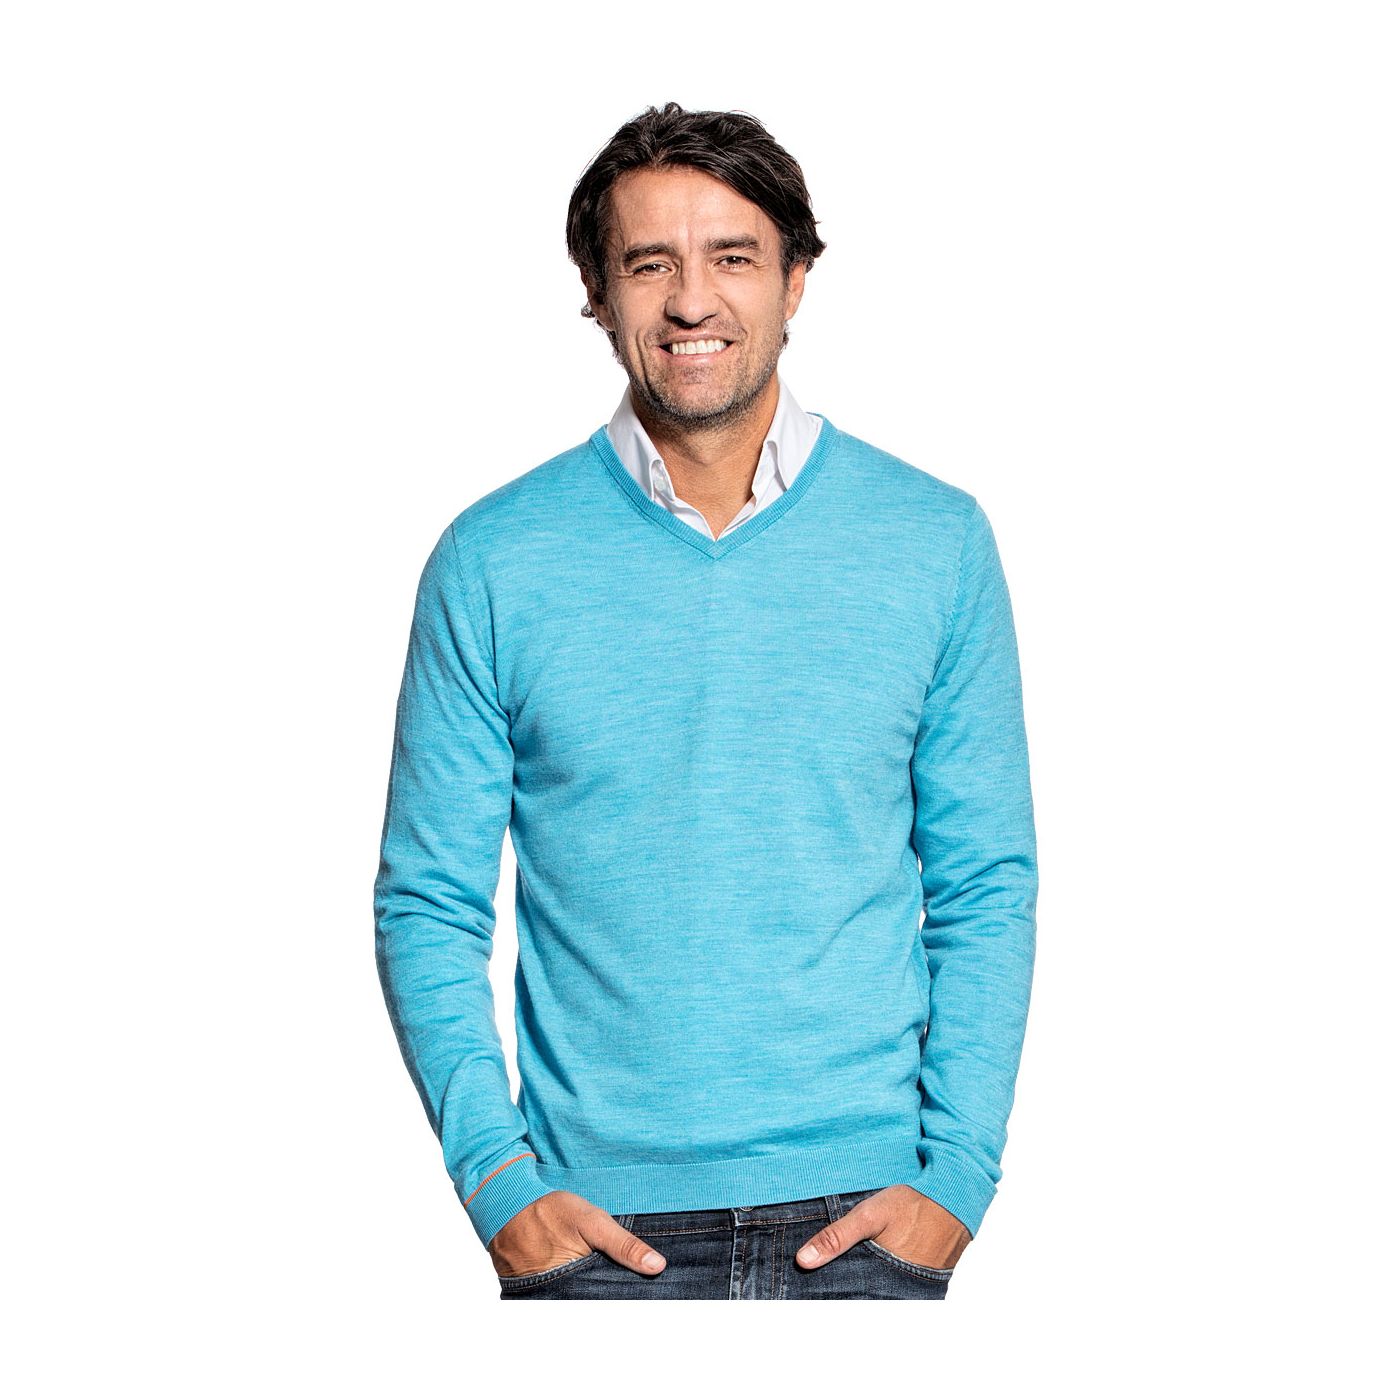 V-Neck sweater for men made of Merino wool in Bright blue